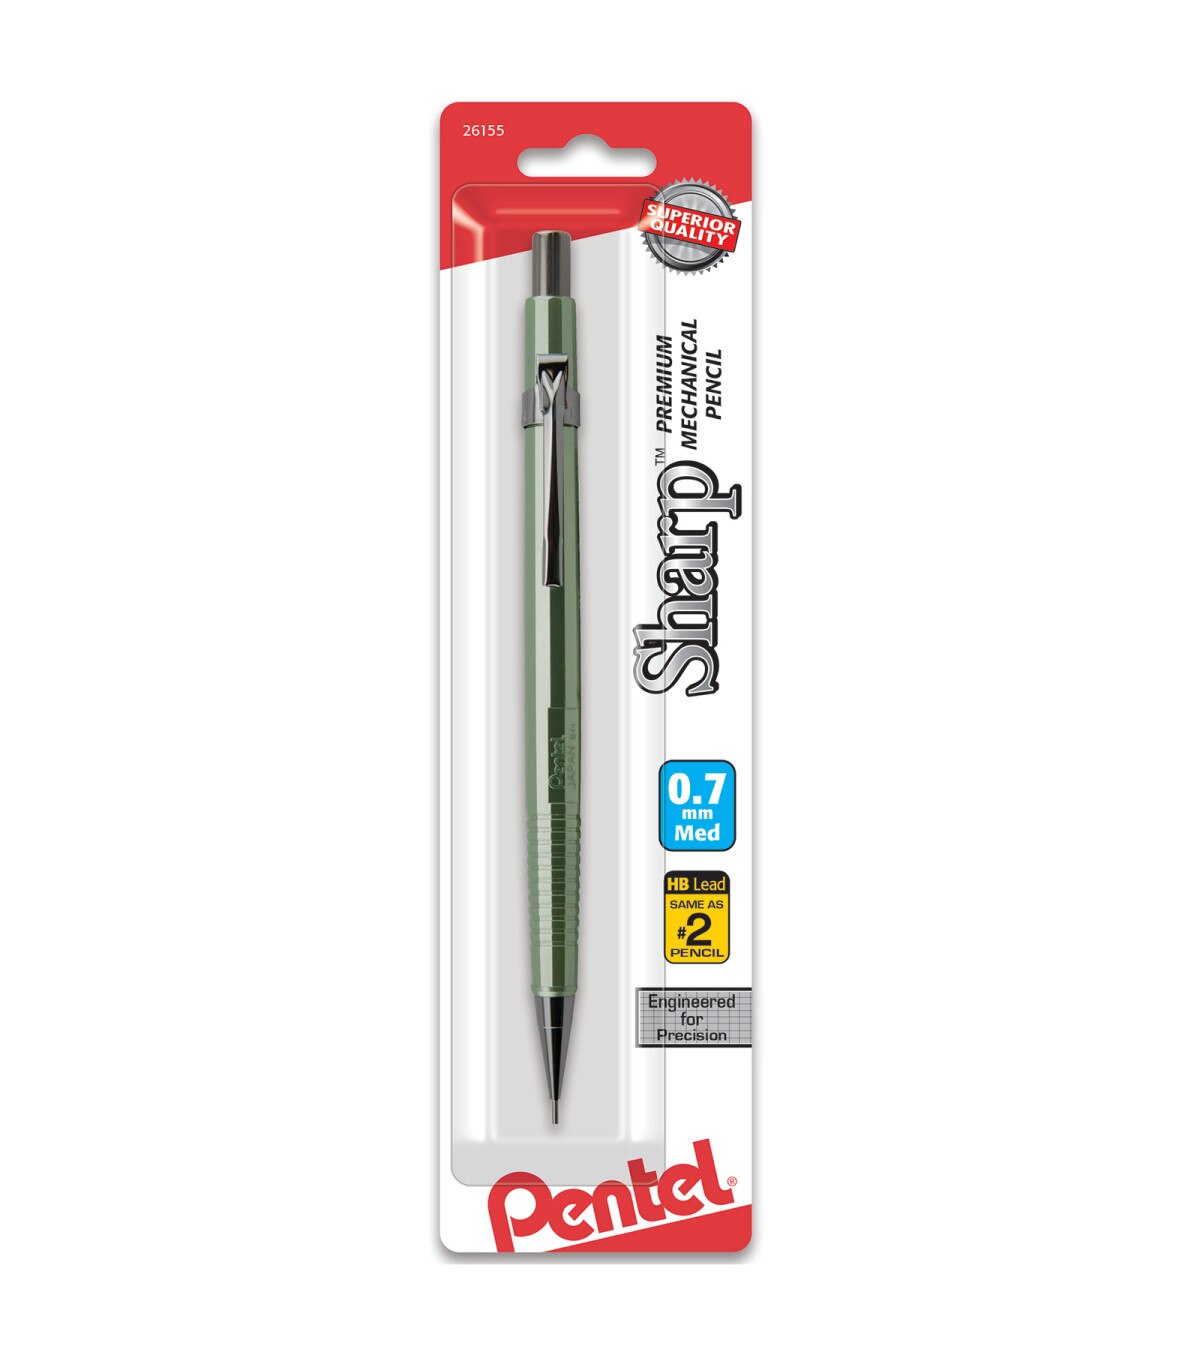 pentel sharp automatic pencil